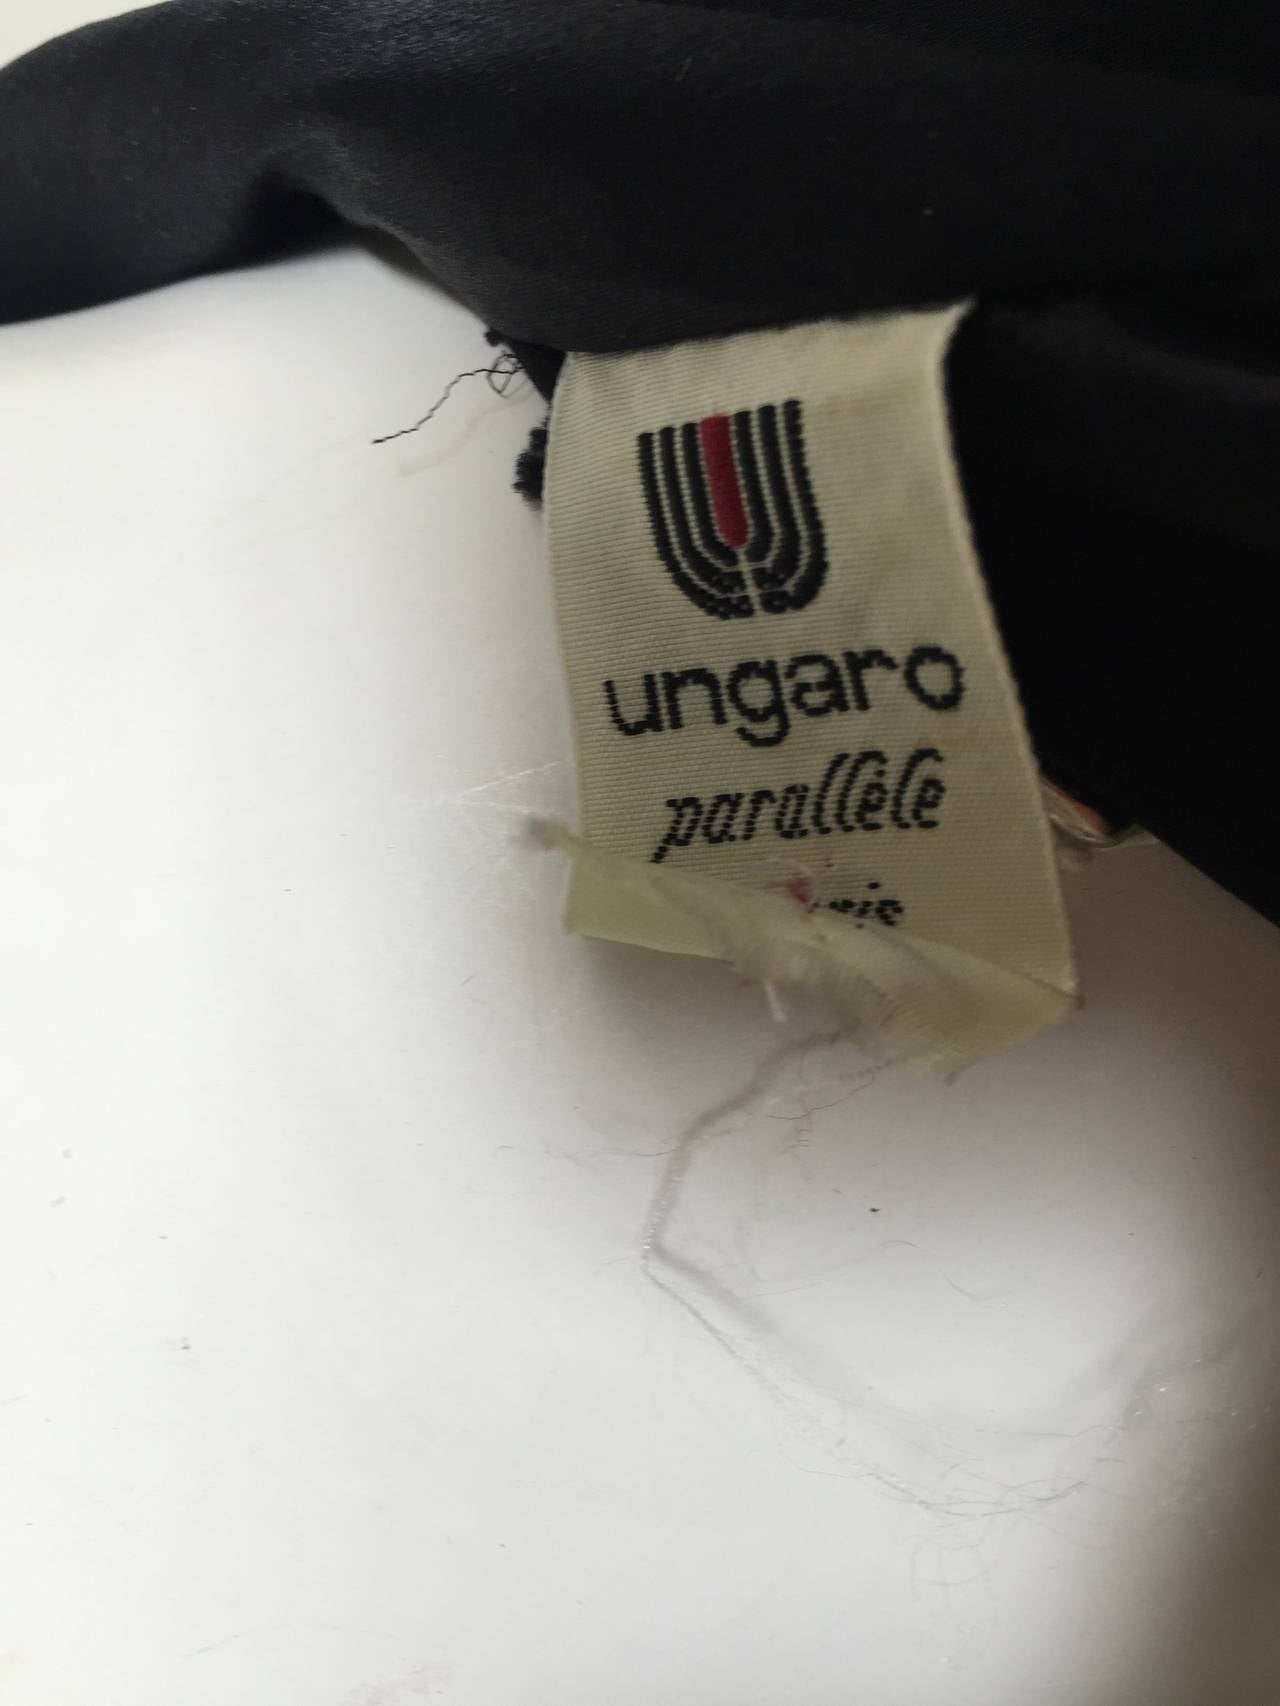 Ungaro Parallele Paris 80s silk camellia dress size 6 / 8. 5